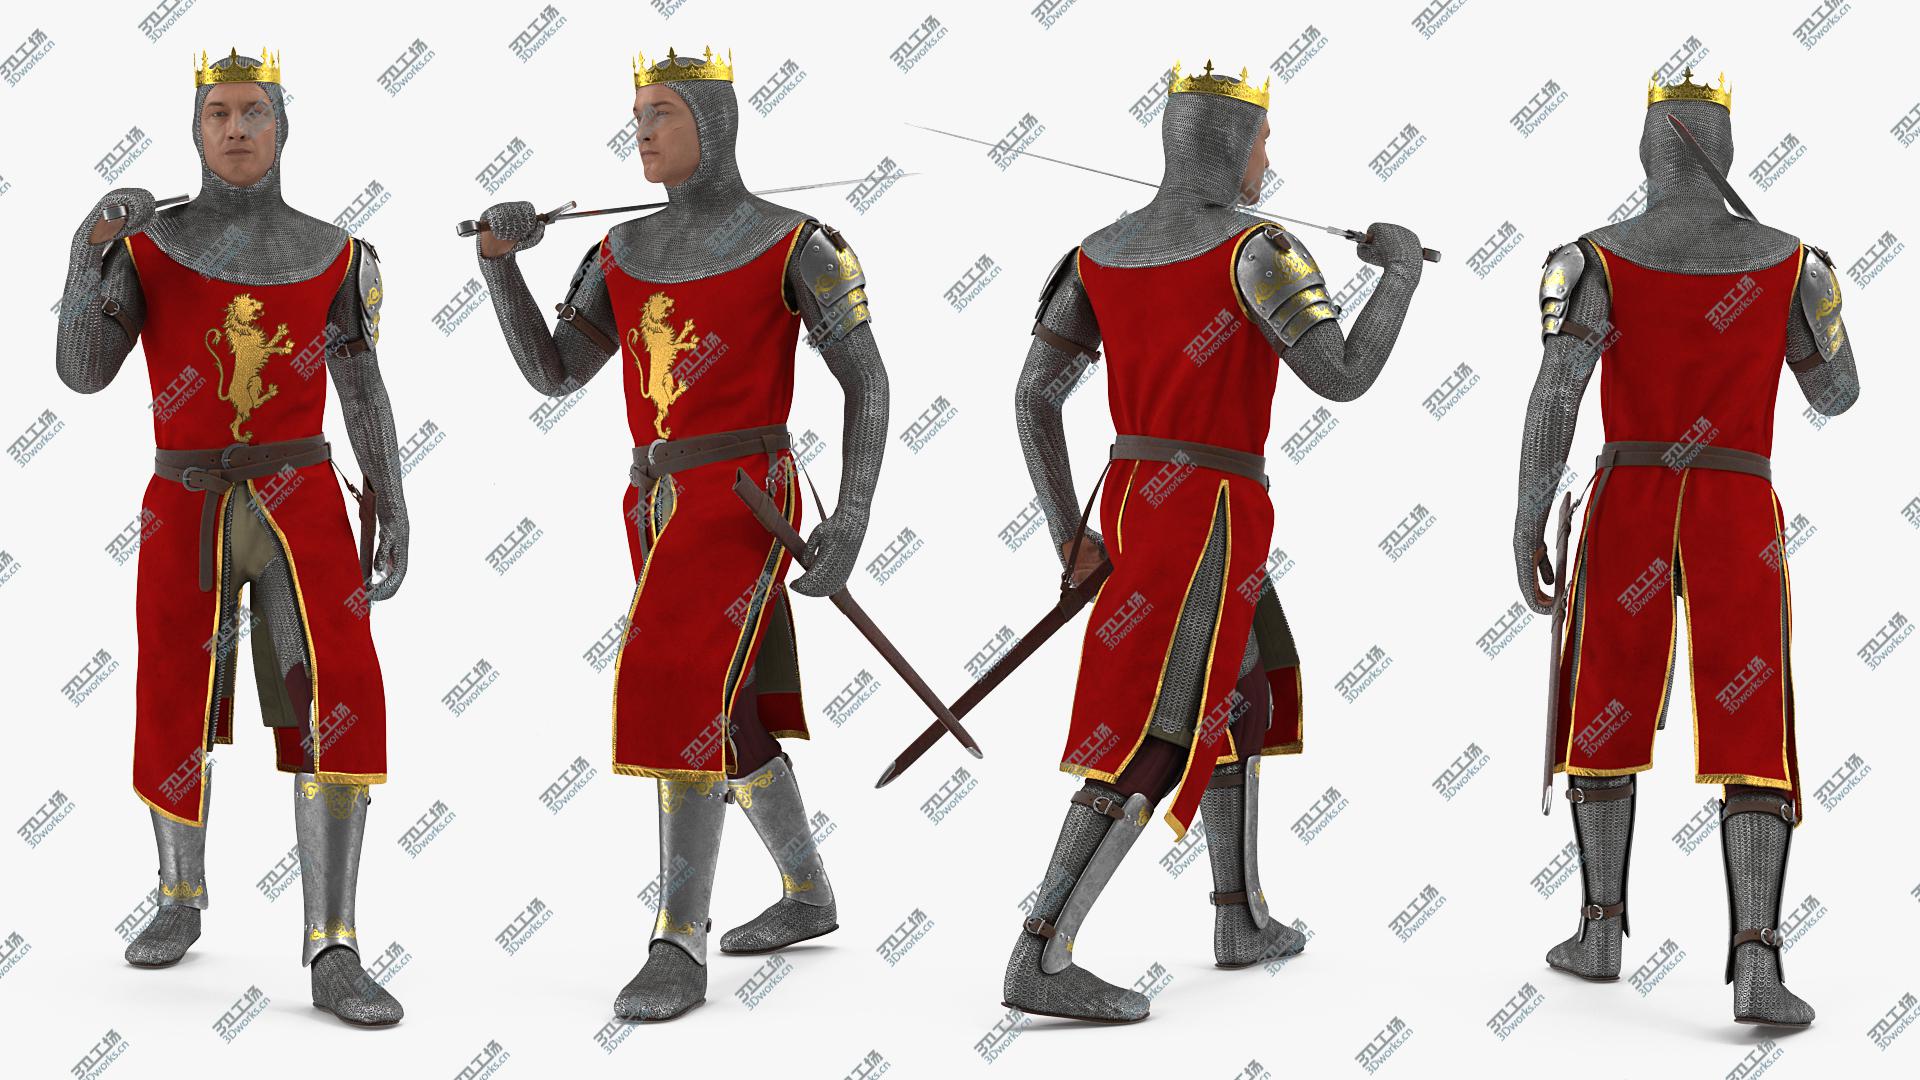 images/goods_img/202104093/3D Crusader Knight King Walking Pose model/4.jpg